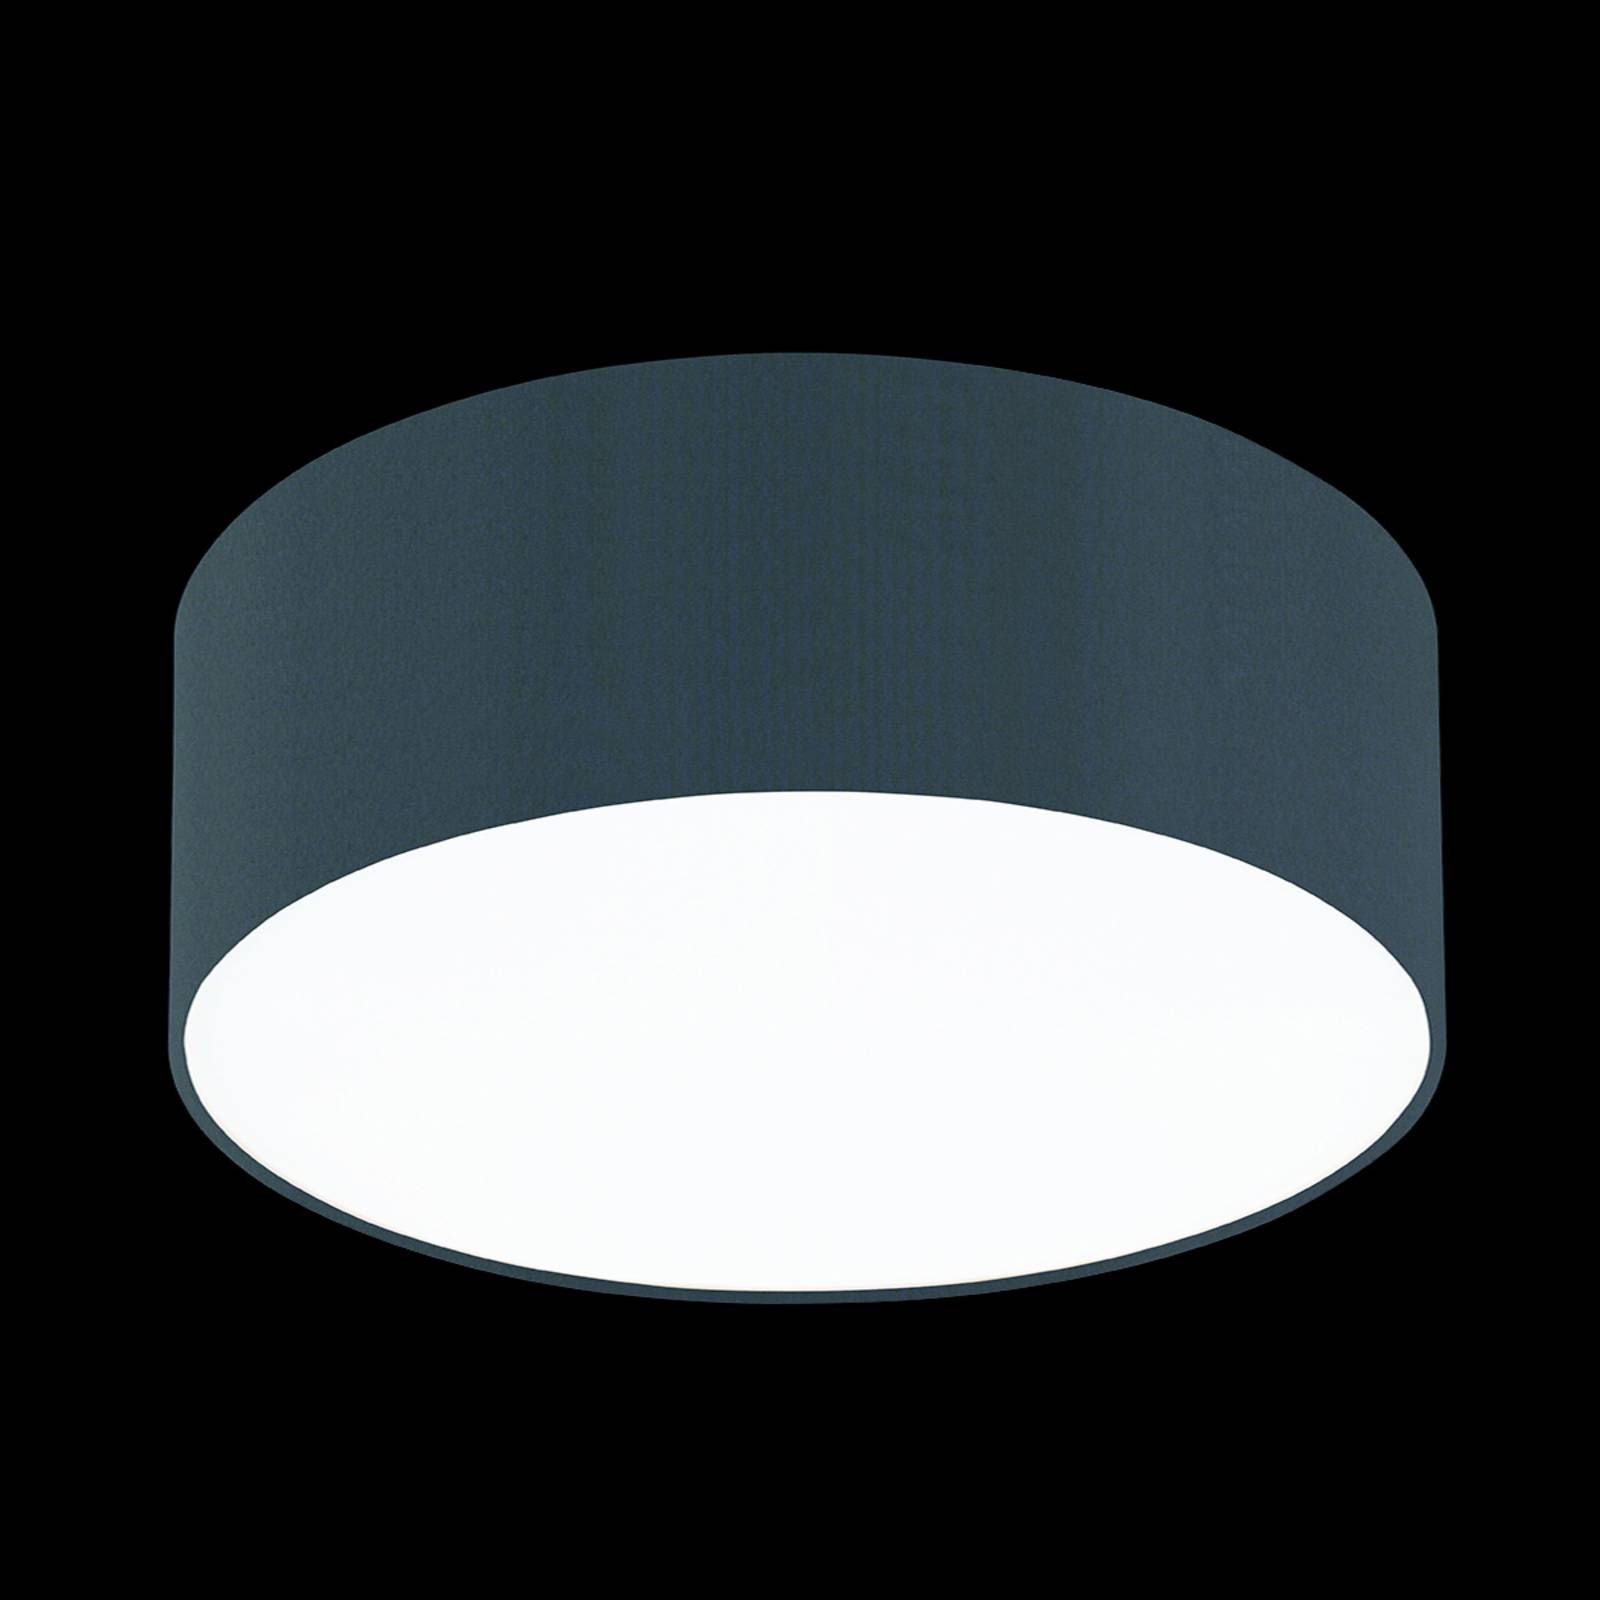 Hufnagel Bridlicovo-sivé stropné svietidlo Mara, 50 cm, Obývacia izba / jedáleň, chinc, E27, 57W, K: 17cm